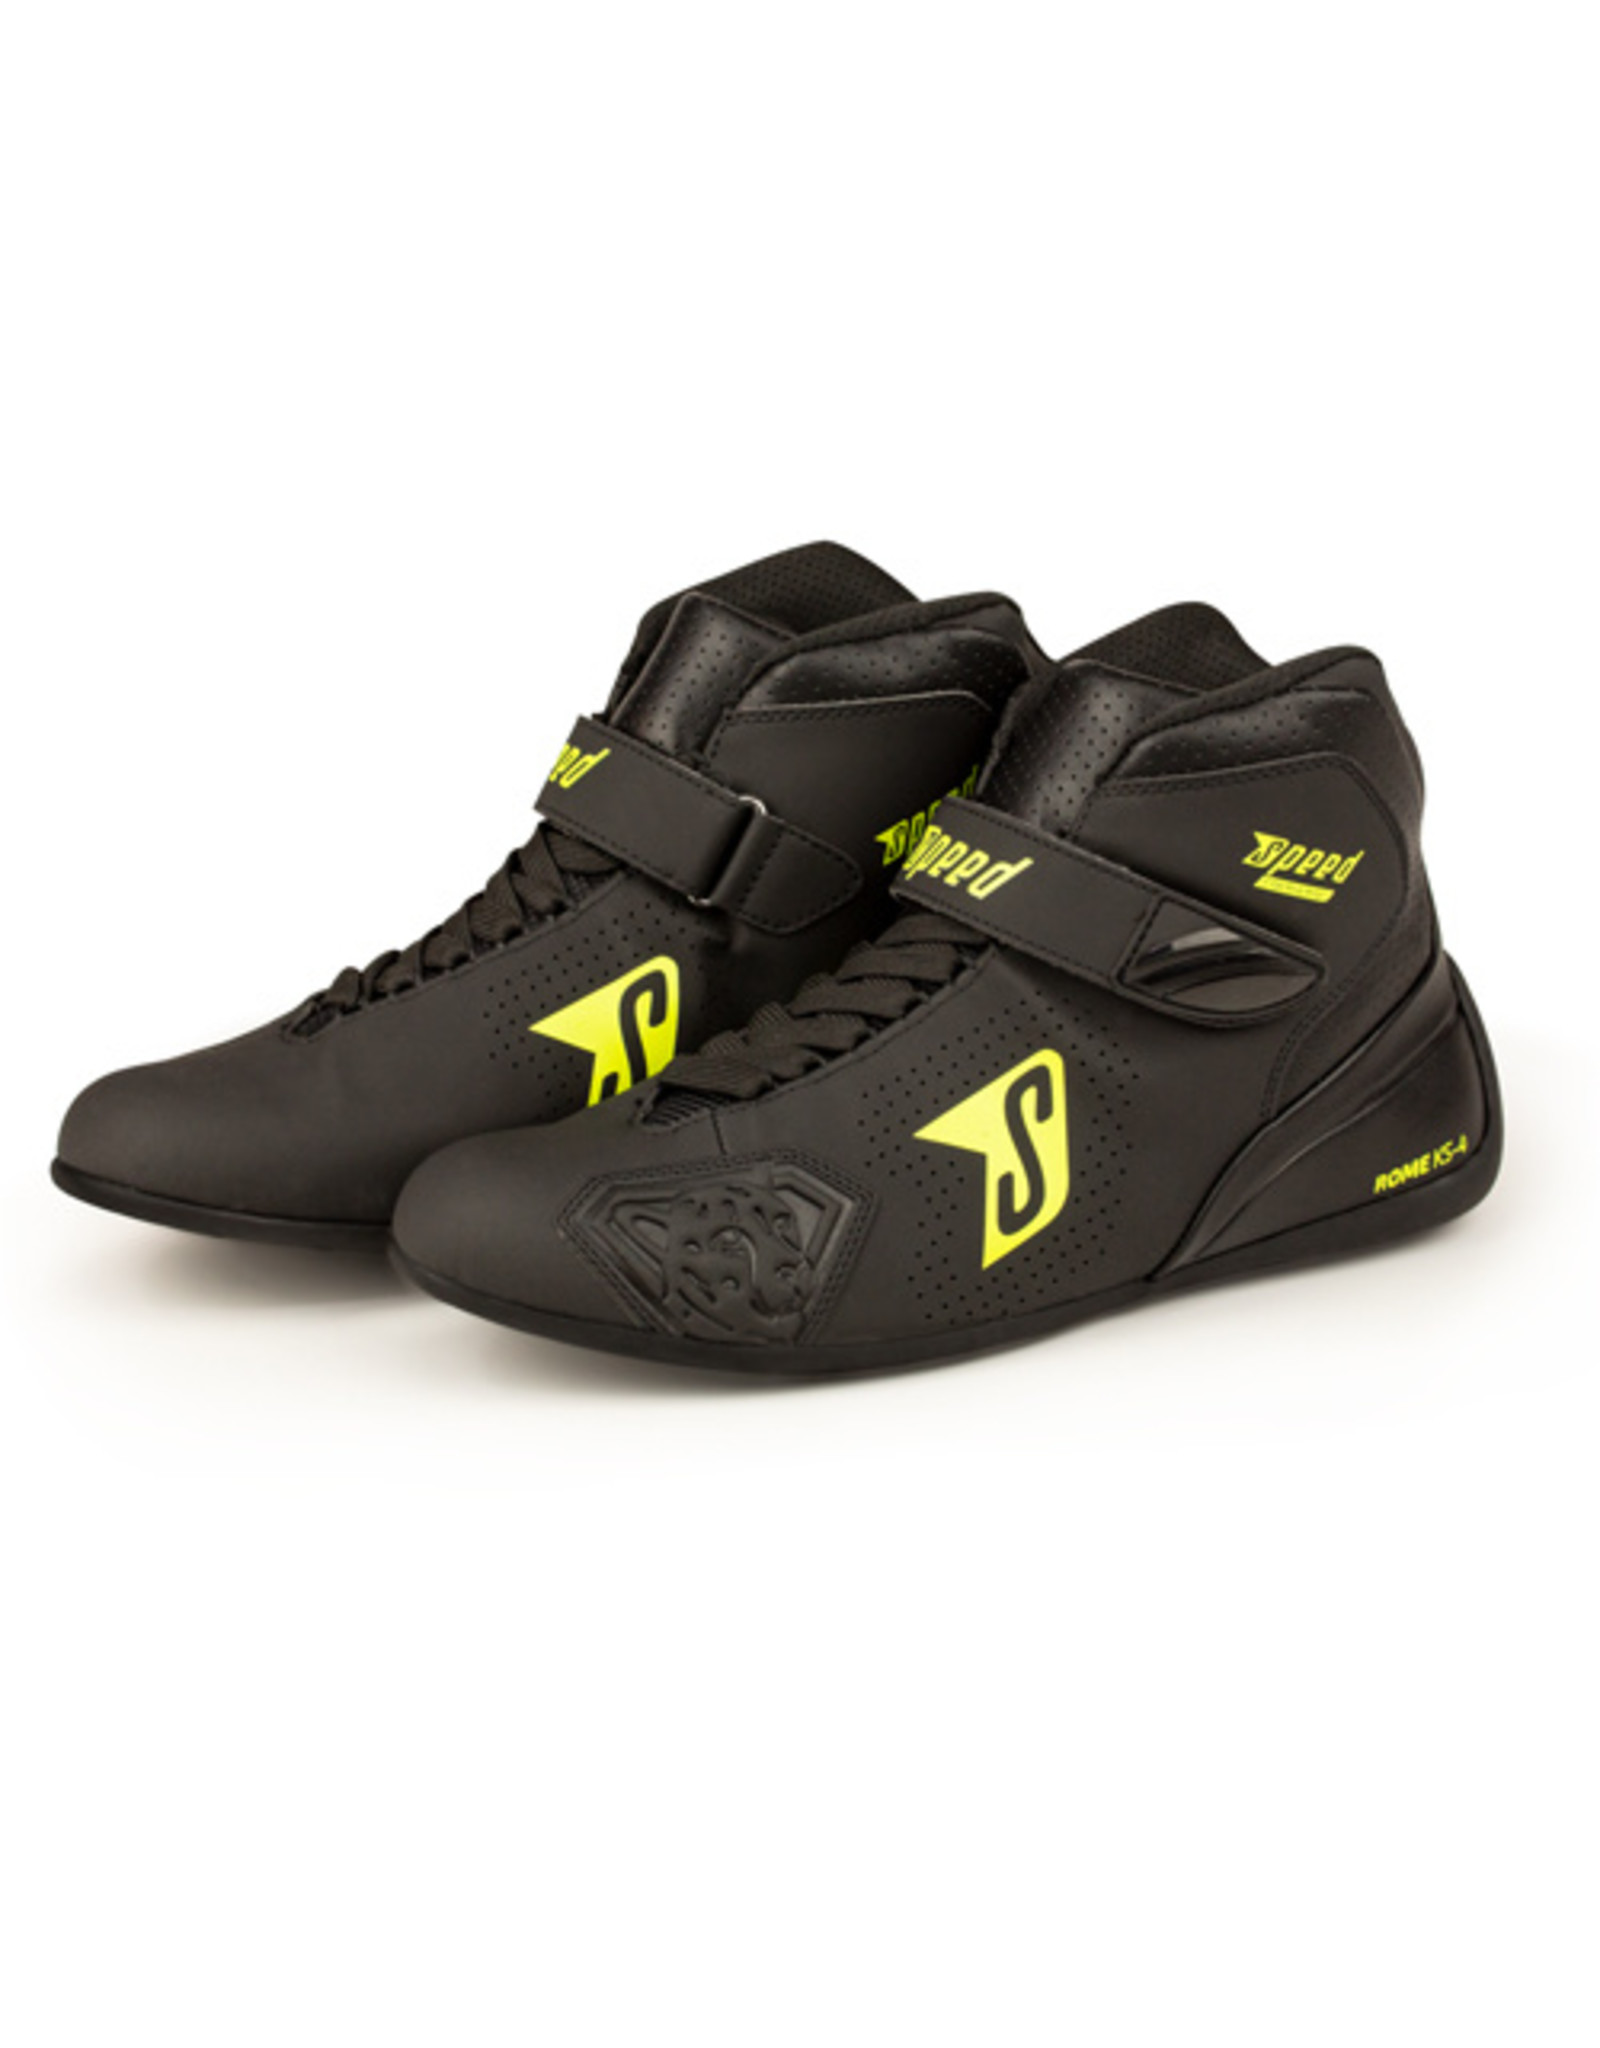 Speed Racewear Speed Rome KS-4 black / fluo yellow